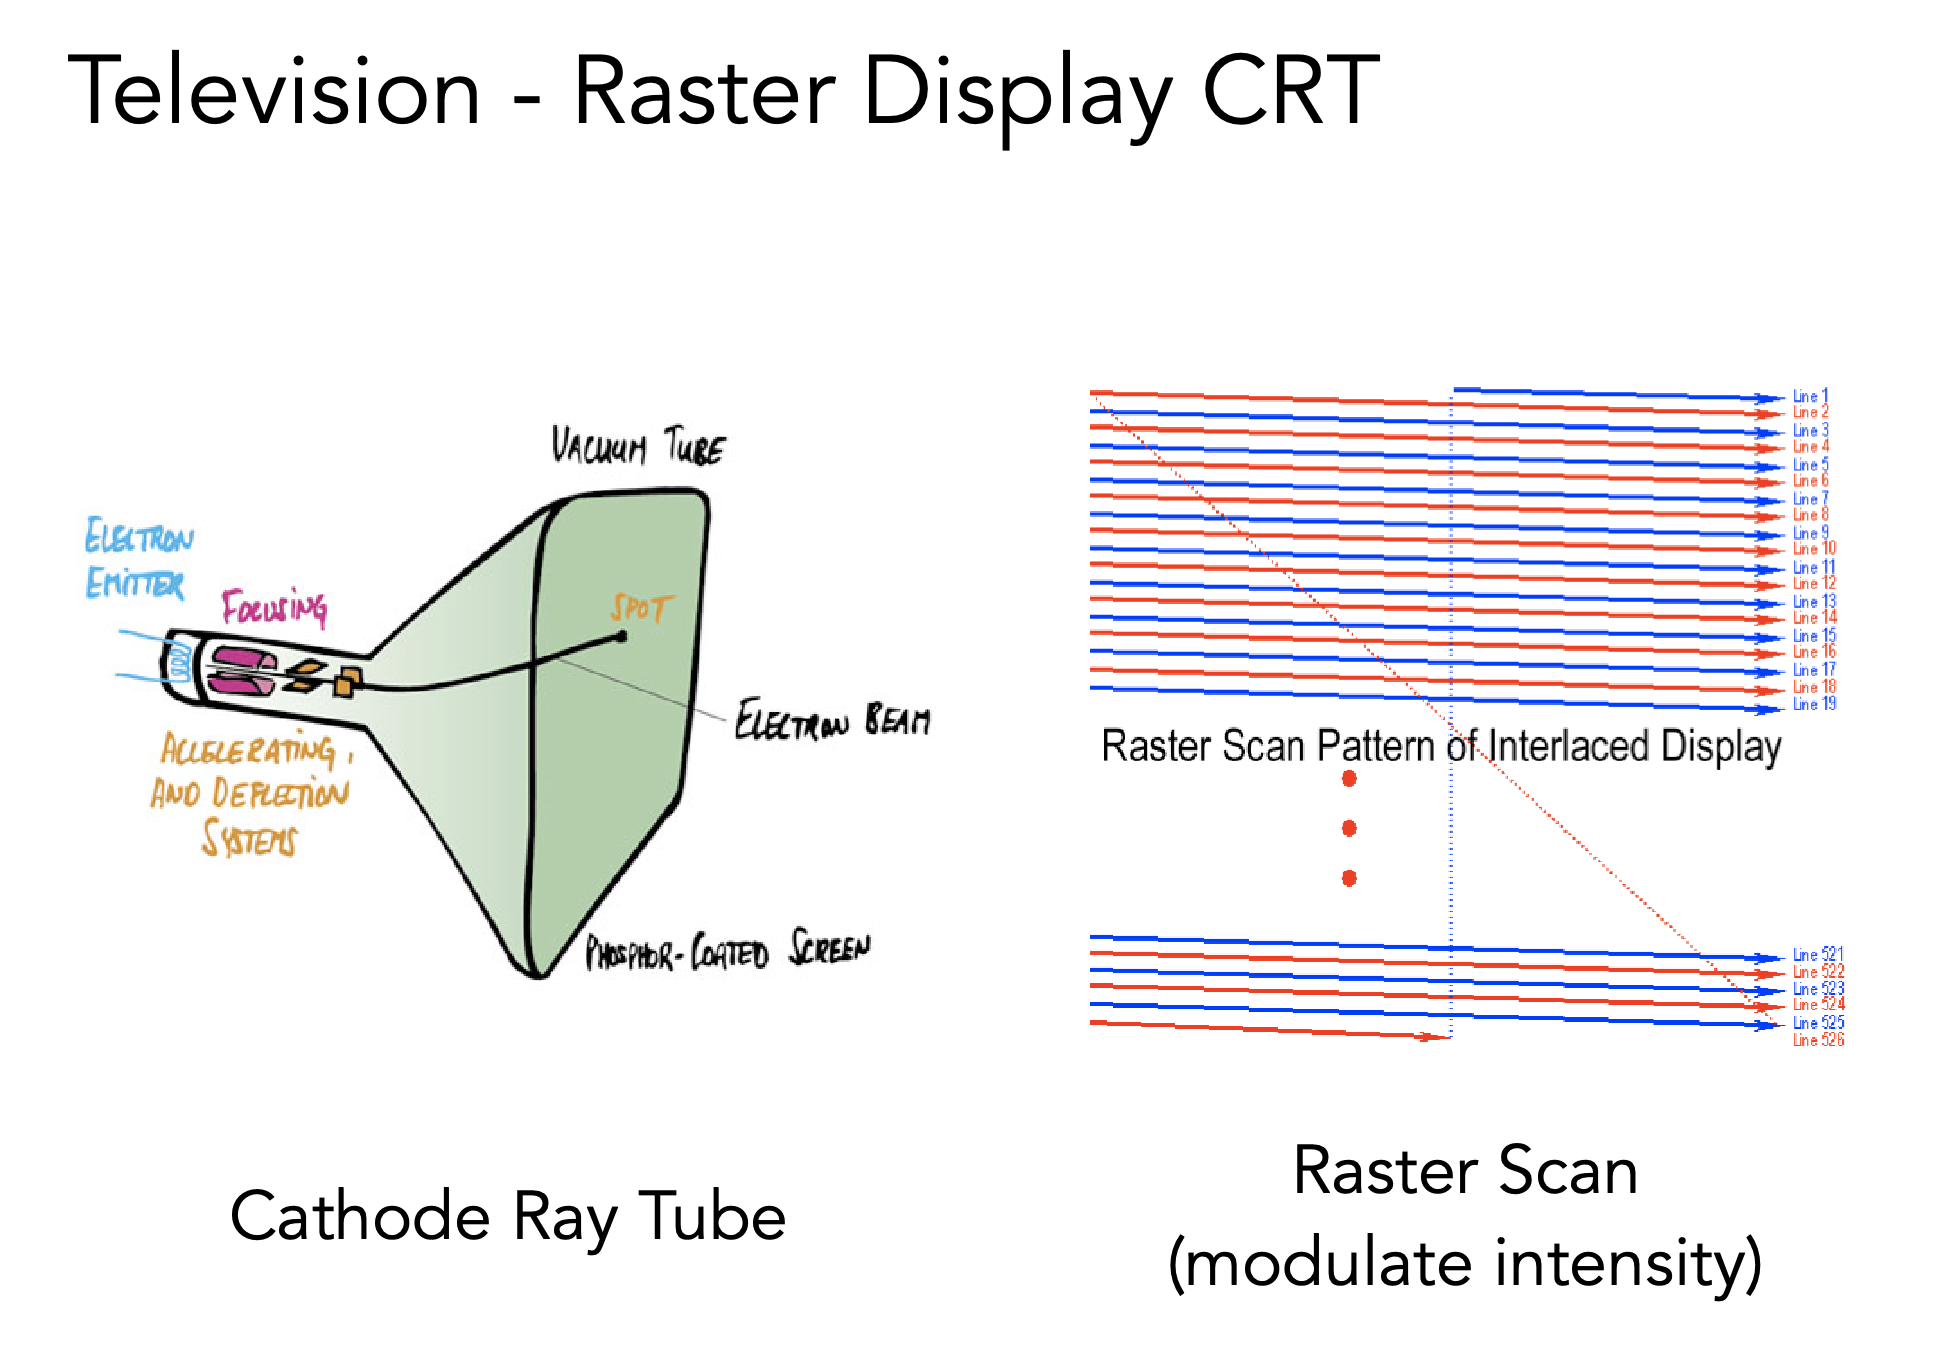 Cathode Ray Tube (CRT) - Television